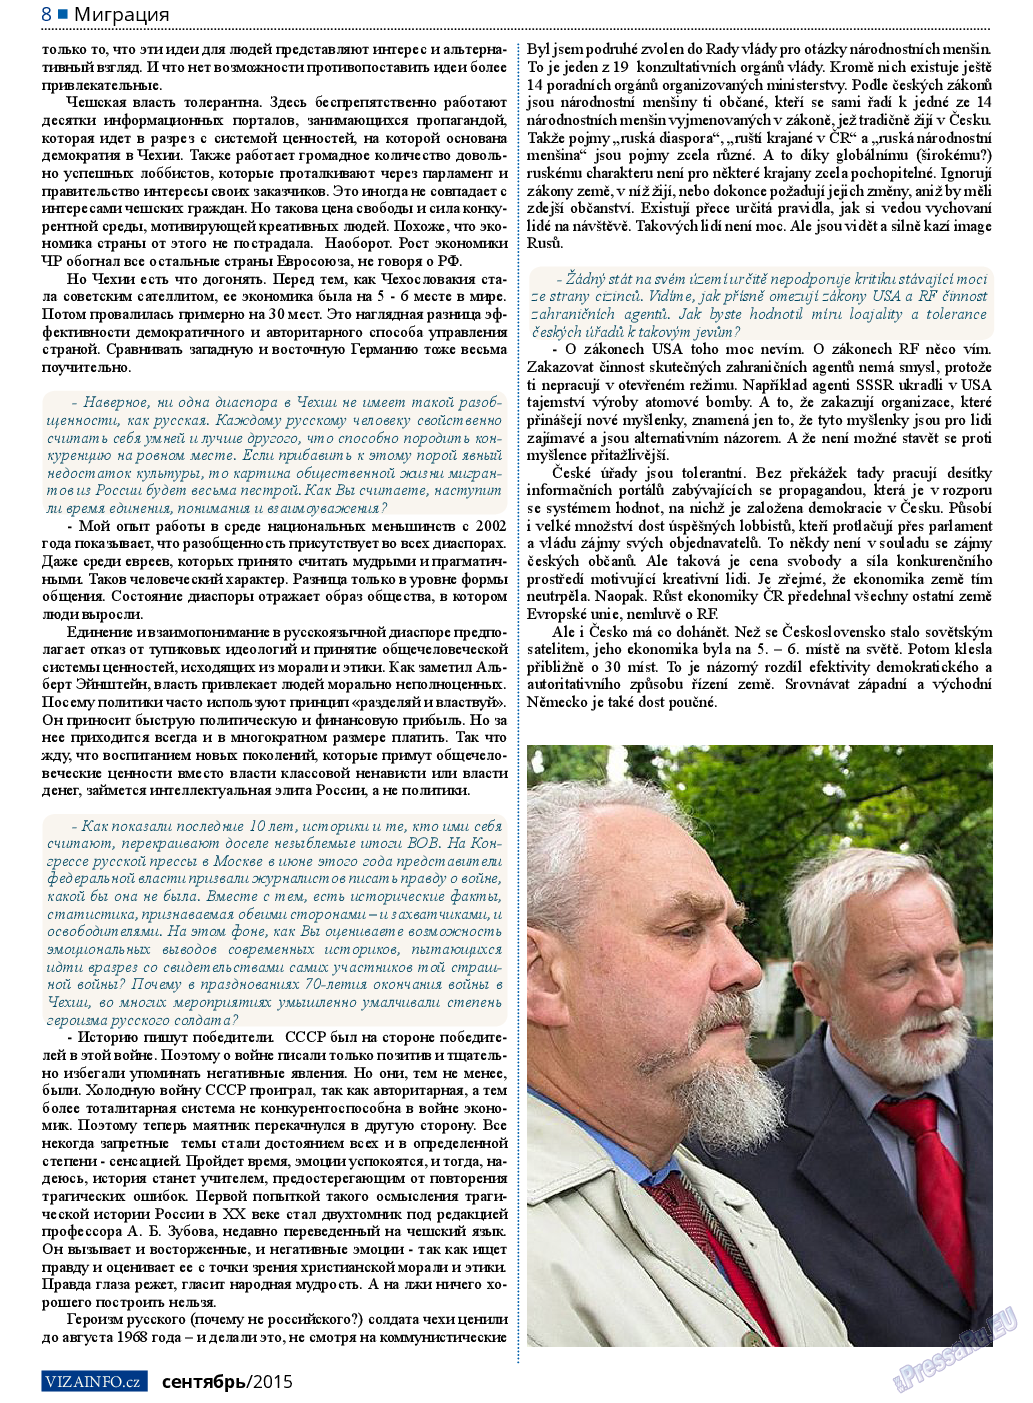 Vizainfo.cz (газета). 2015 год, номер 72, стр. 8